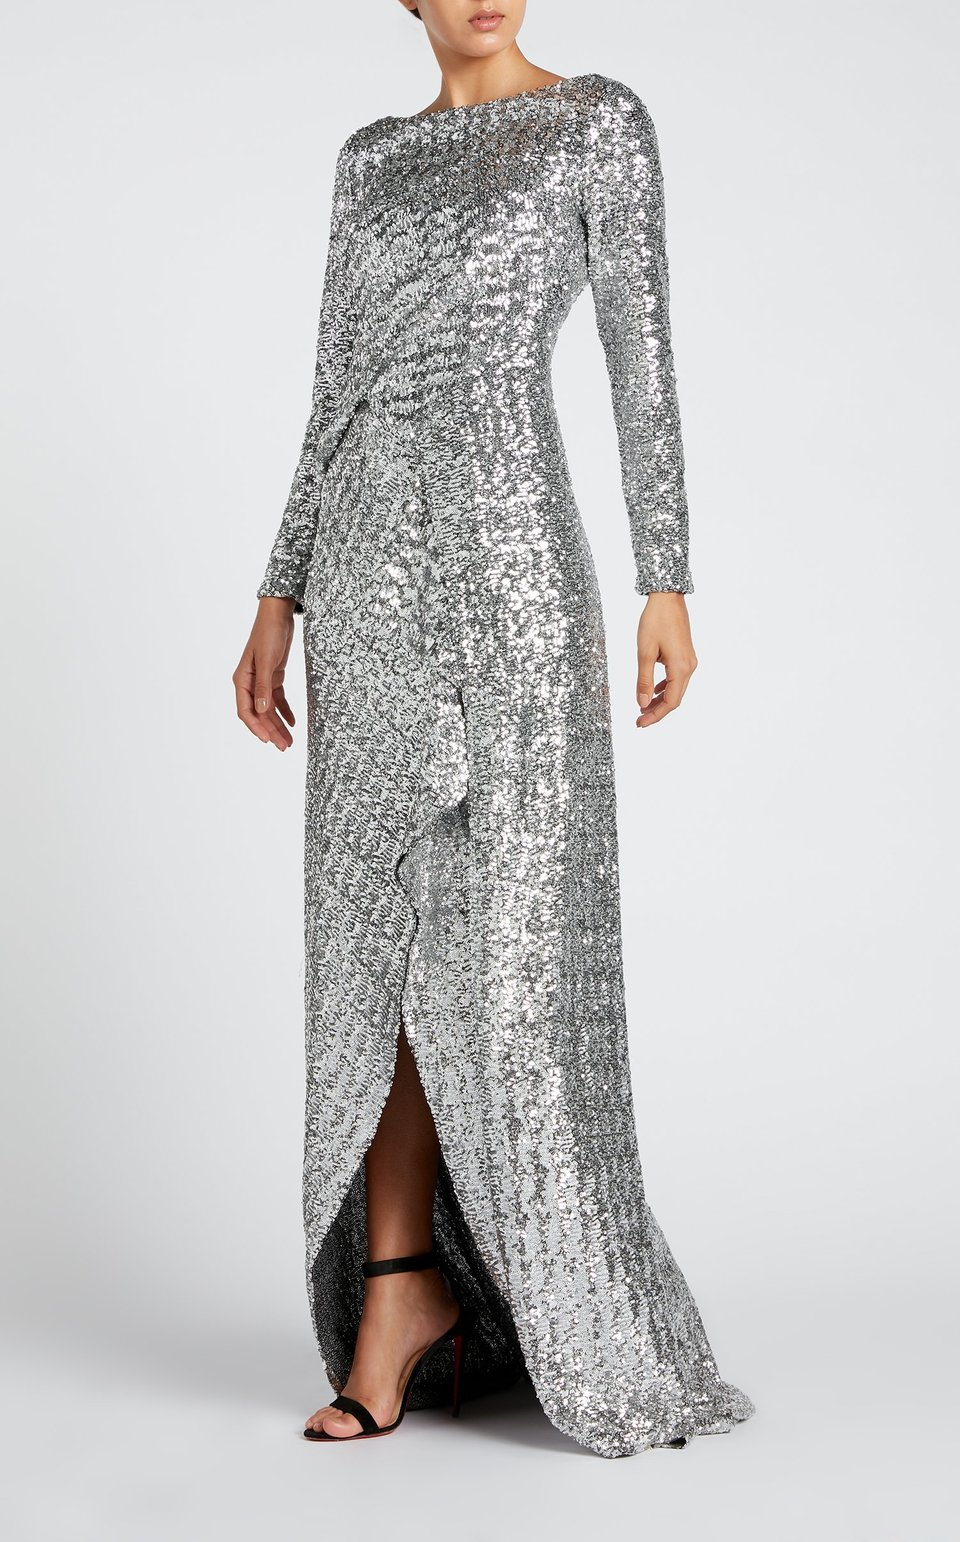 roland mouret silver dress